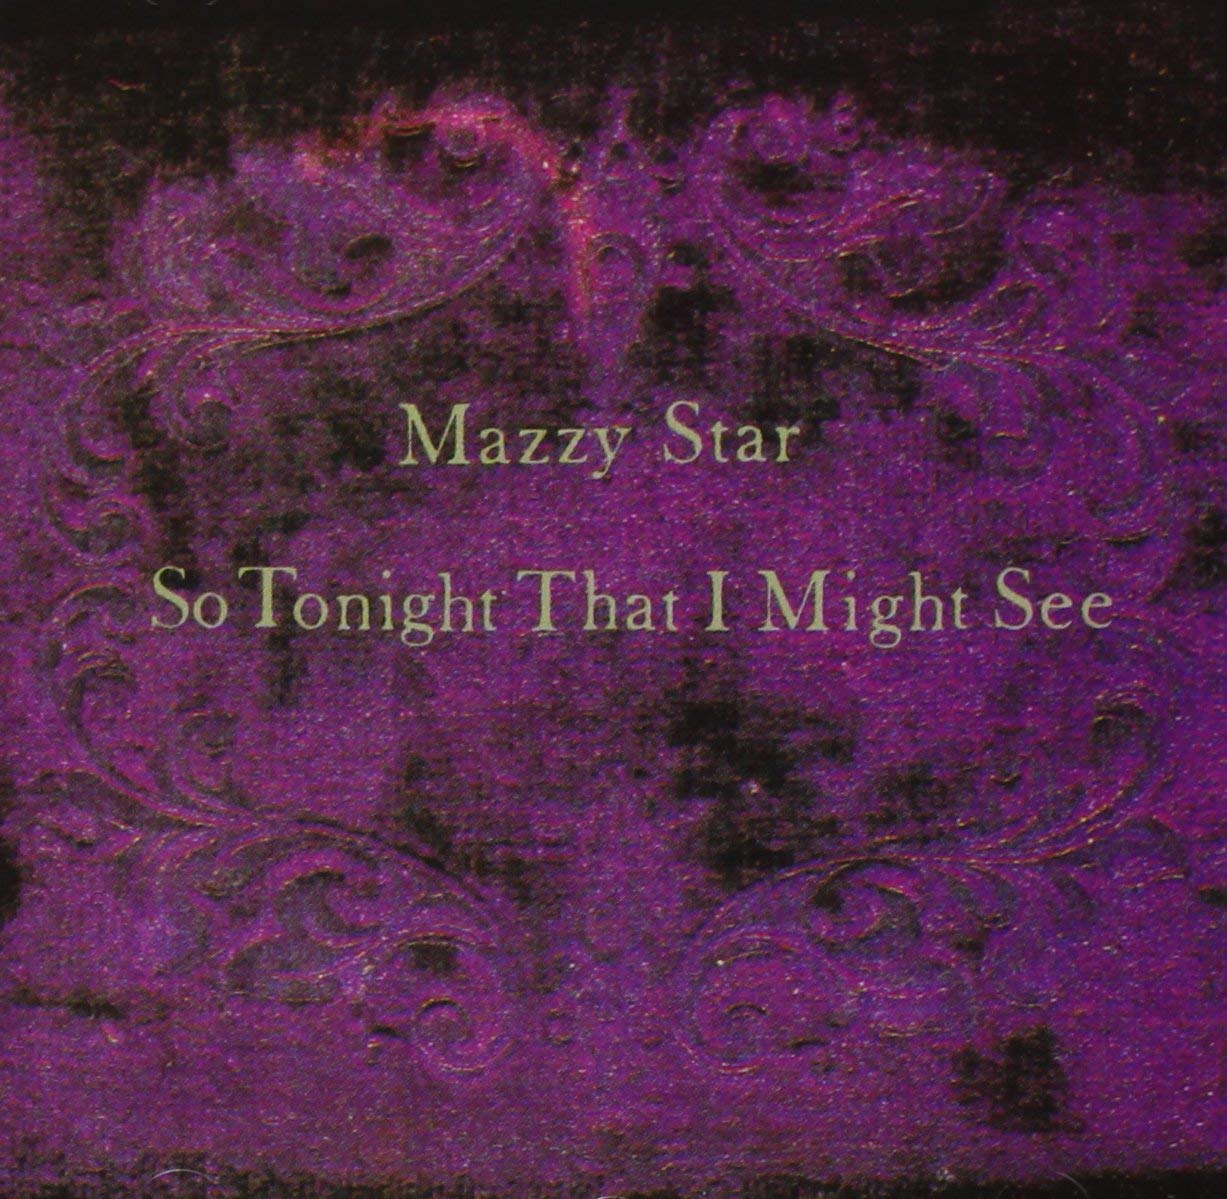 Mazzy Star - So Tonight That I Might See (RSD Essential Violet Smoke Purple/Black Vinyl)